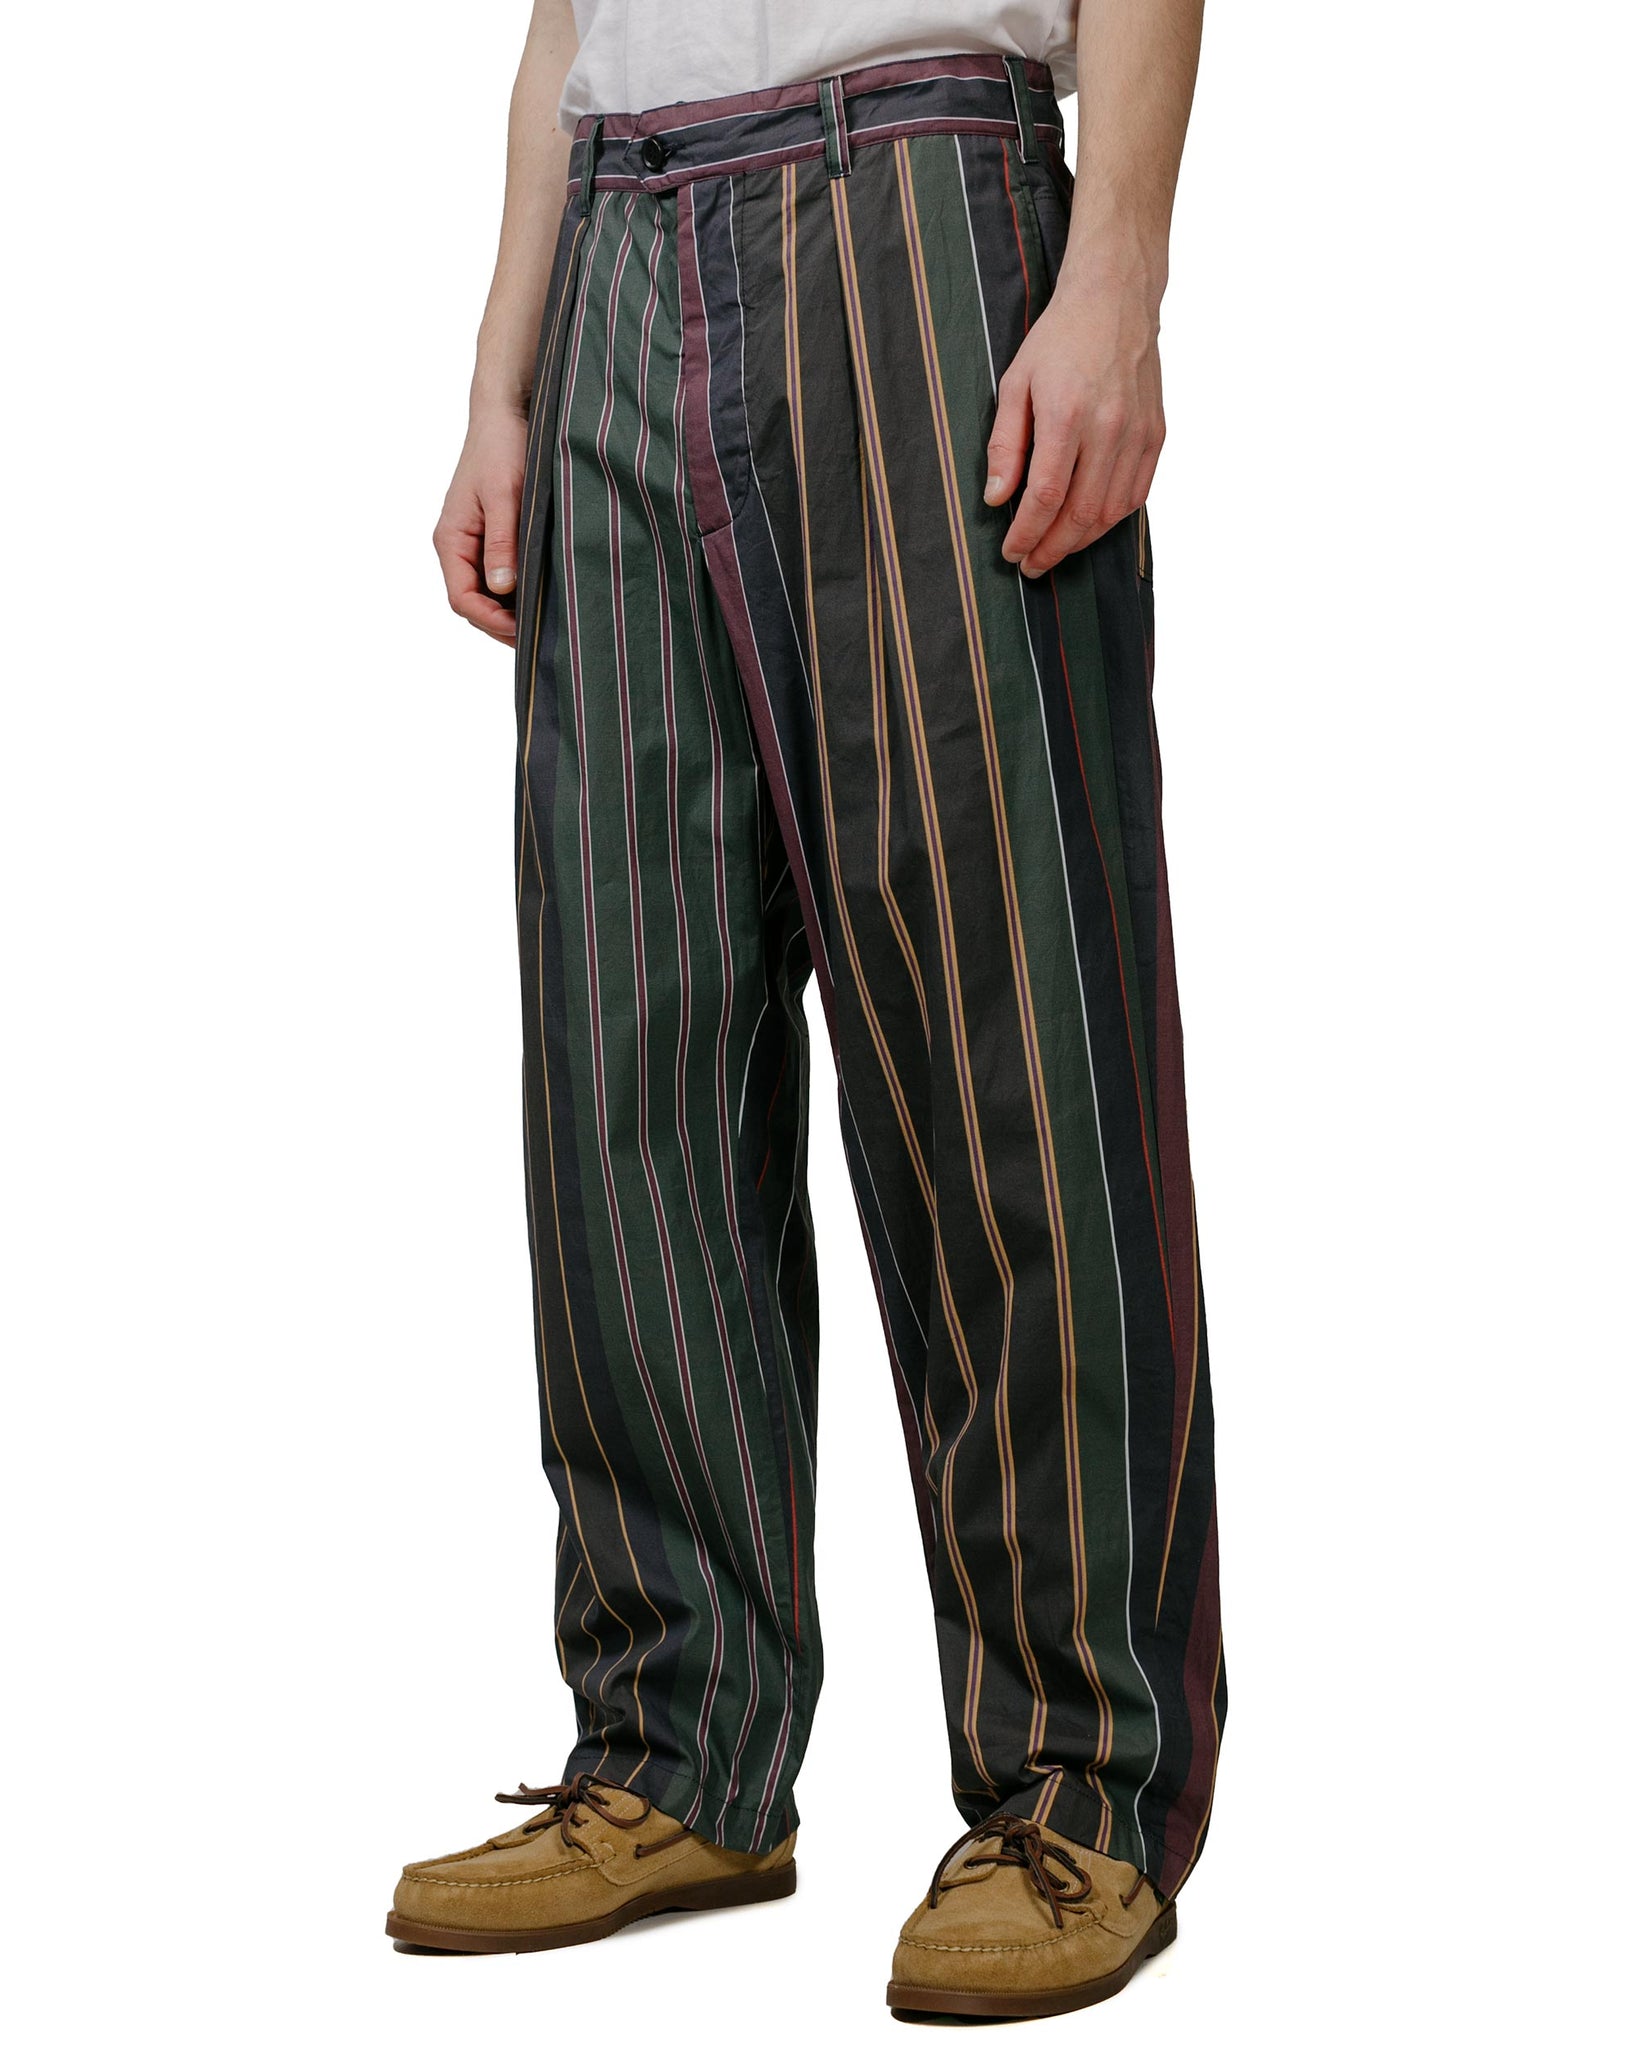 Engineered Garments Carlyle Pant Multi Color Regimental Stripe model front